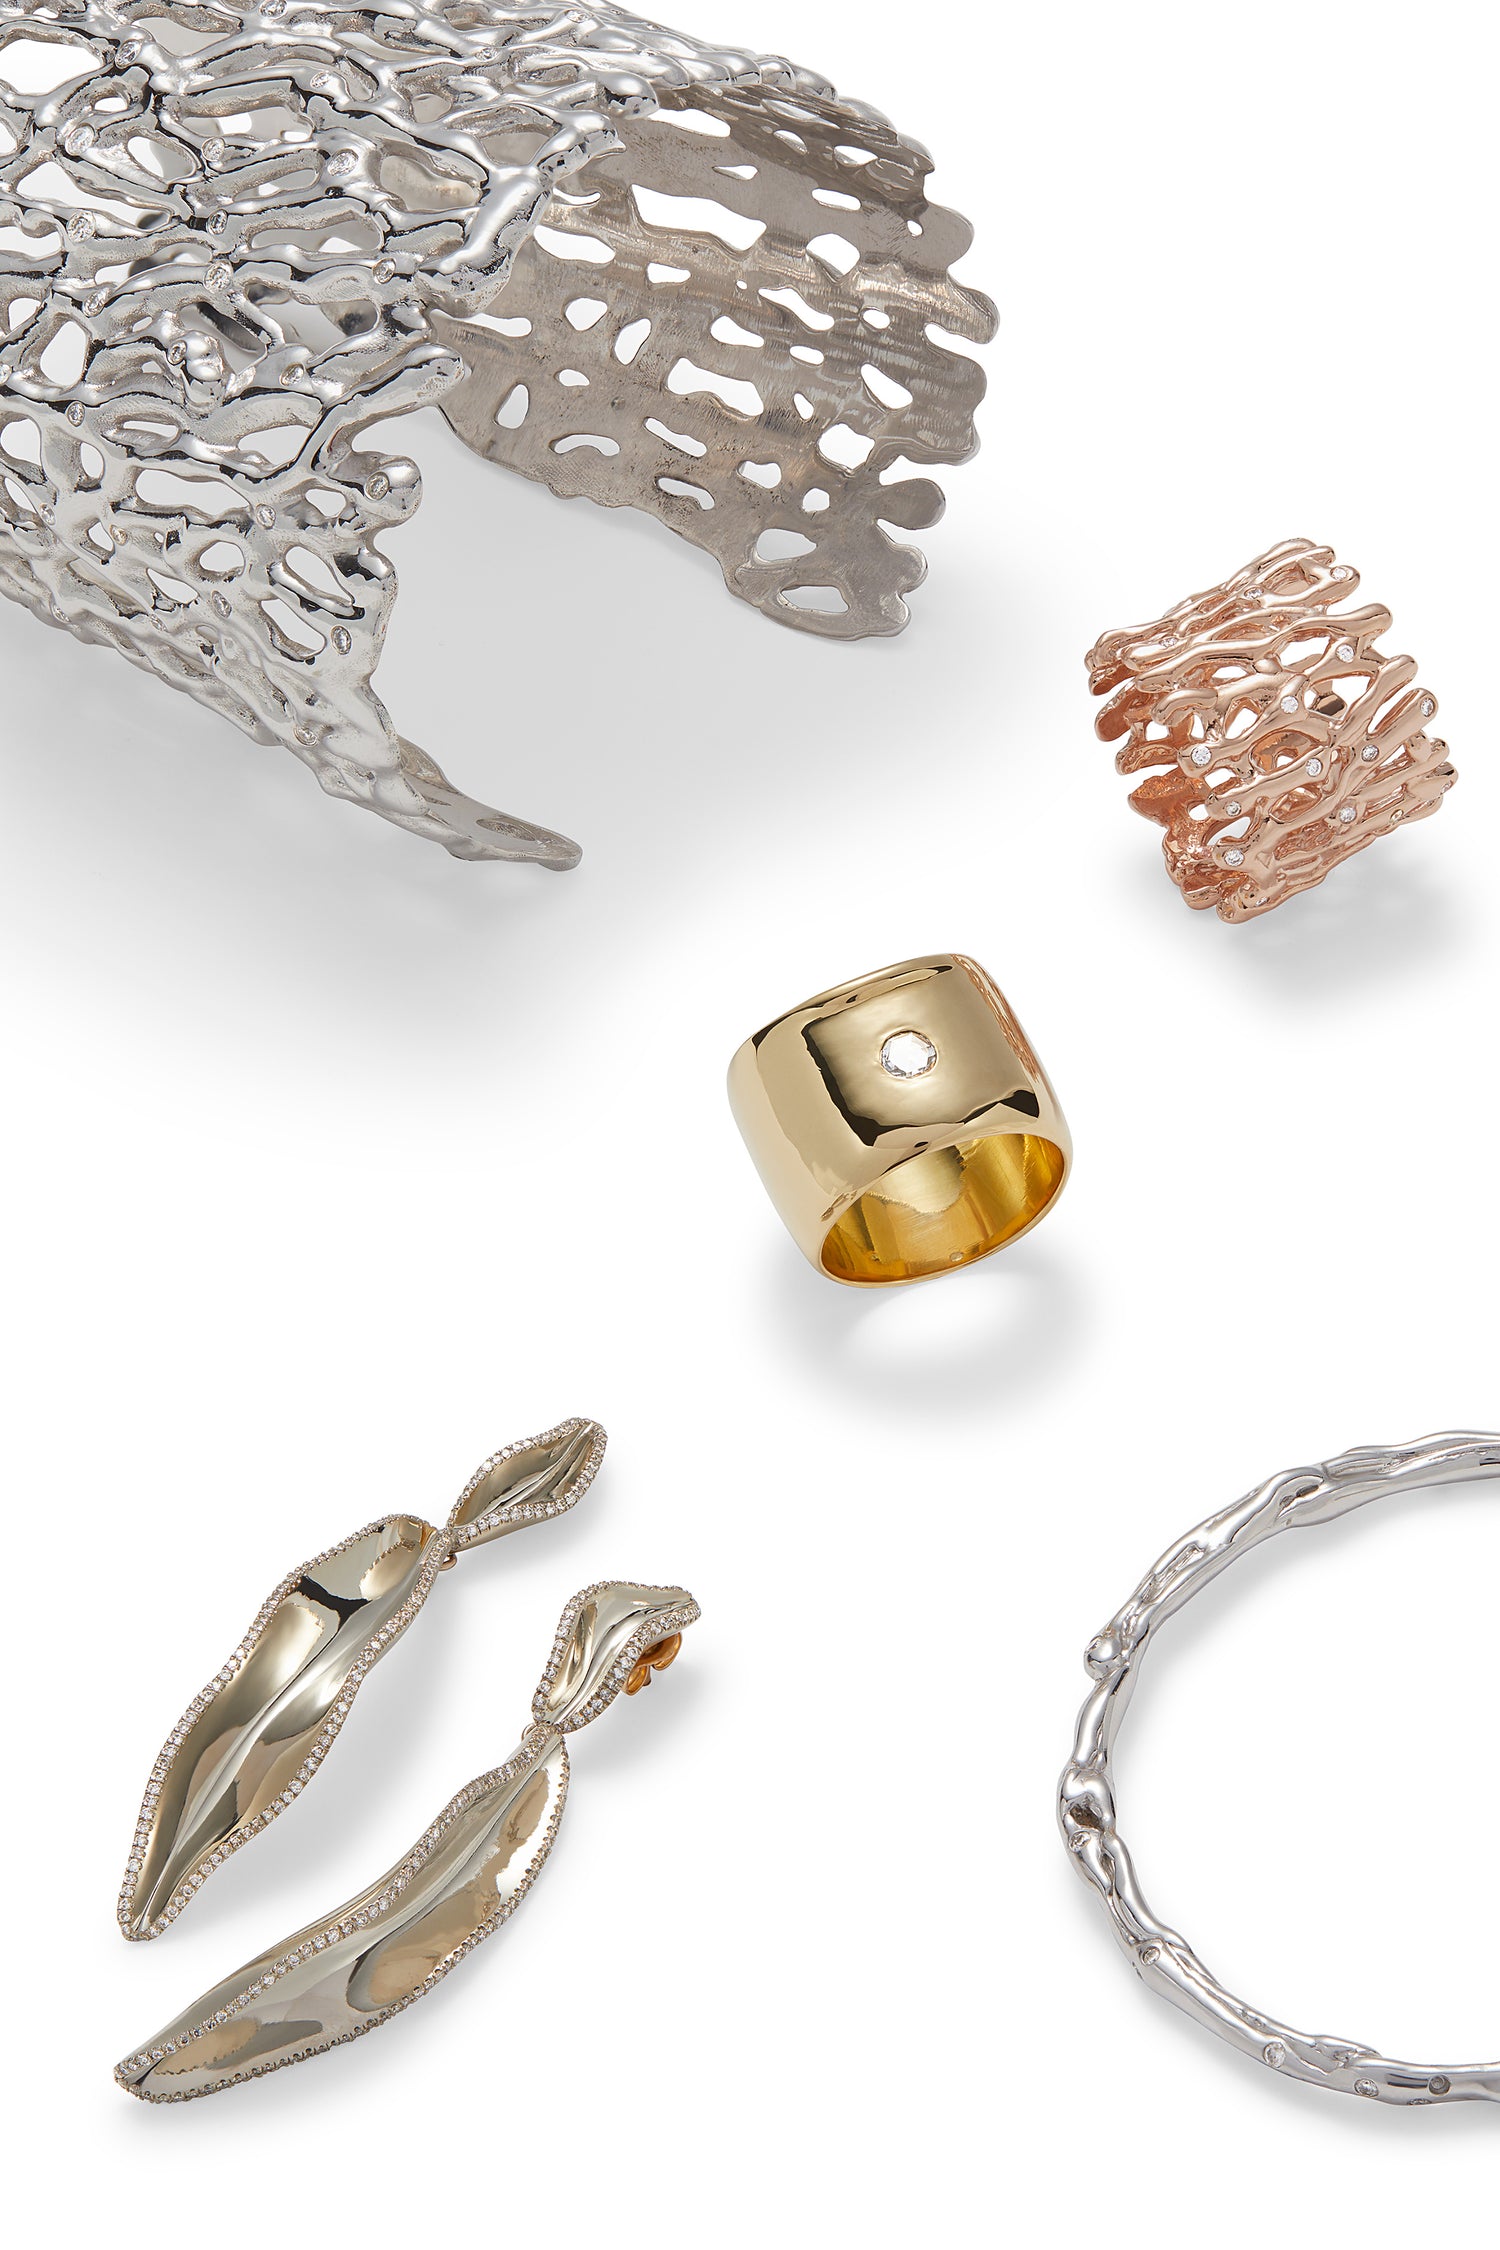 Emerging Designers Diamond Initiative \ Sabre Jewelry